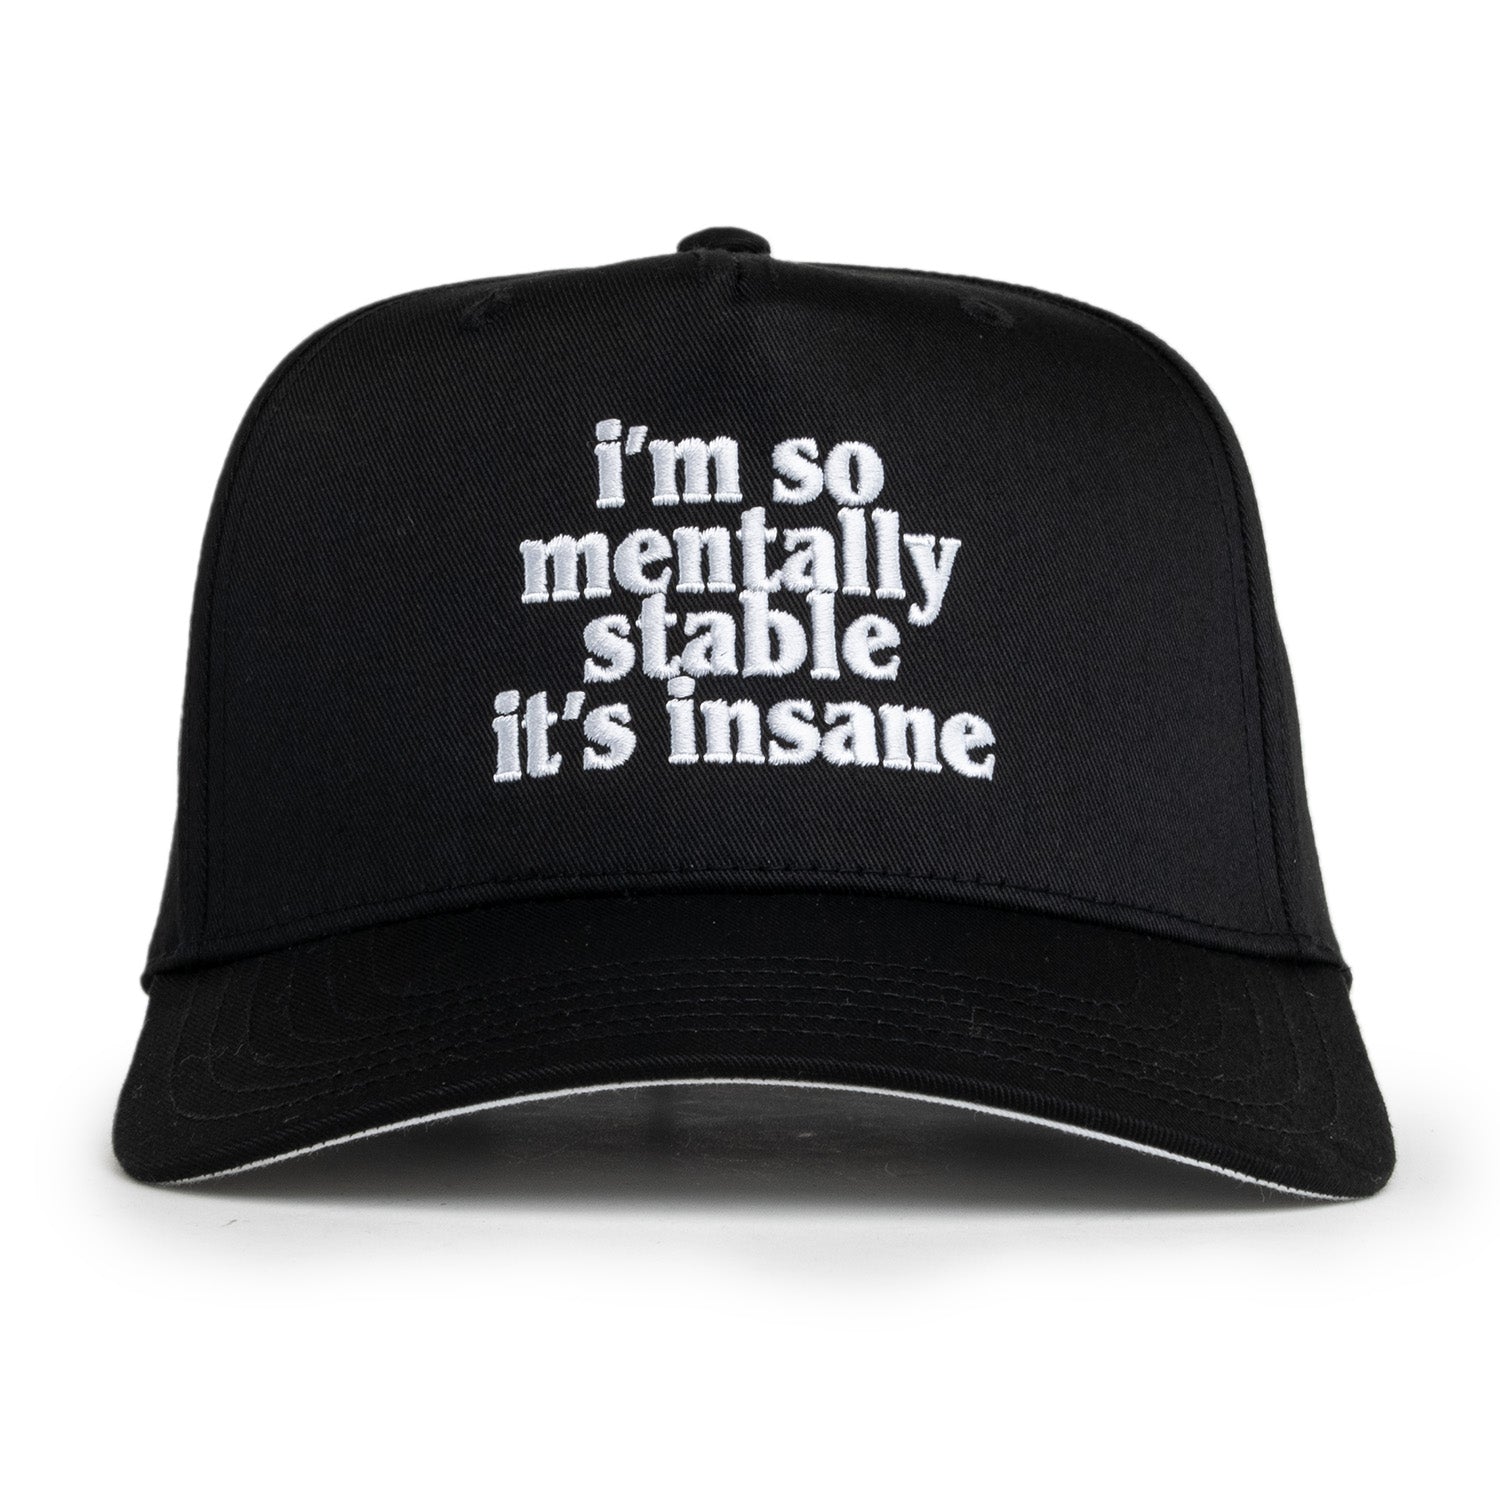 i'm so mentally stable it's insane hat Black